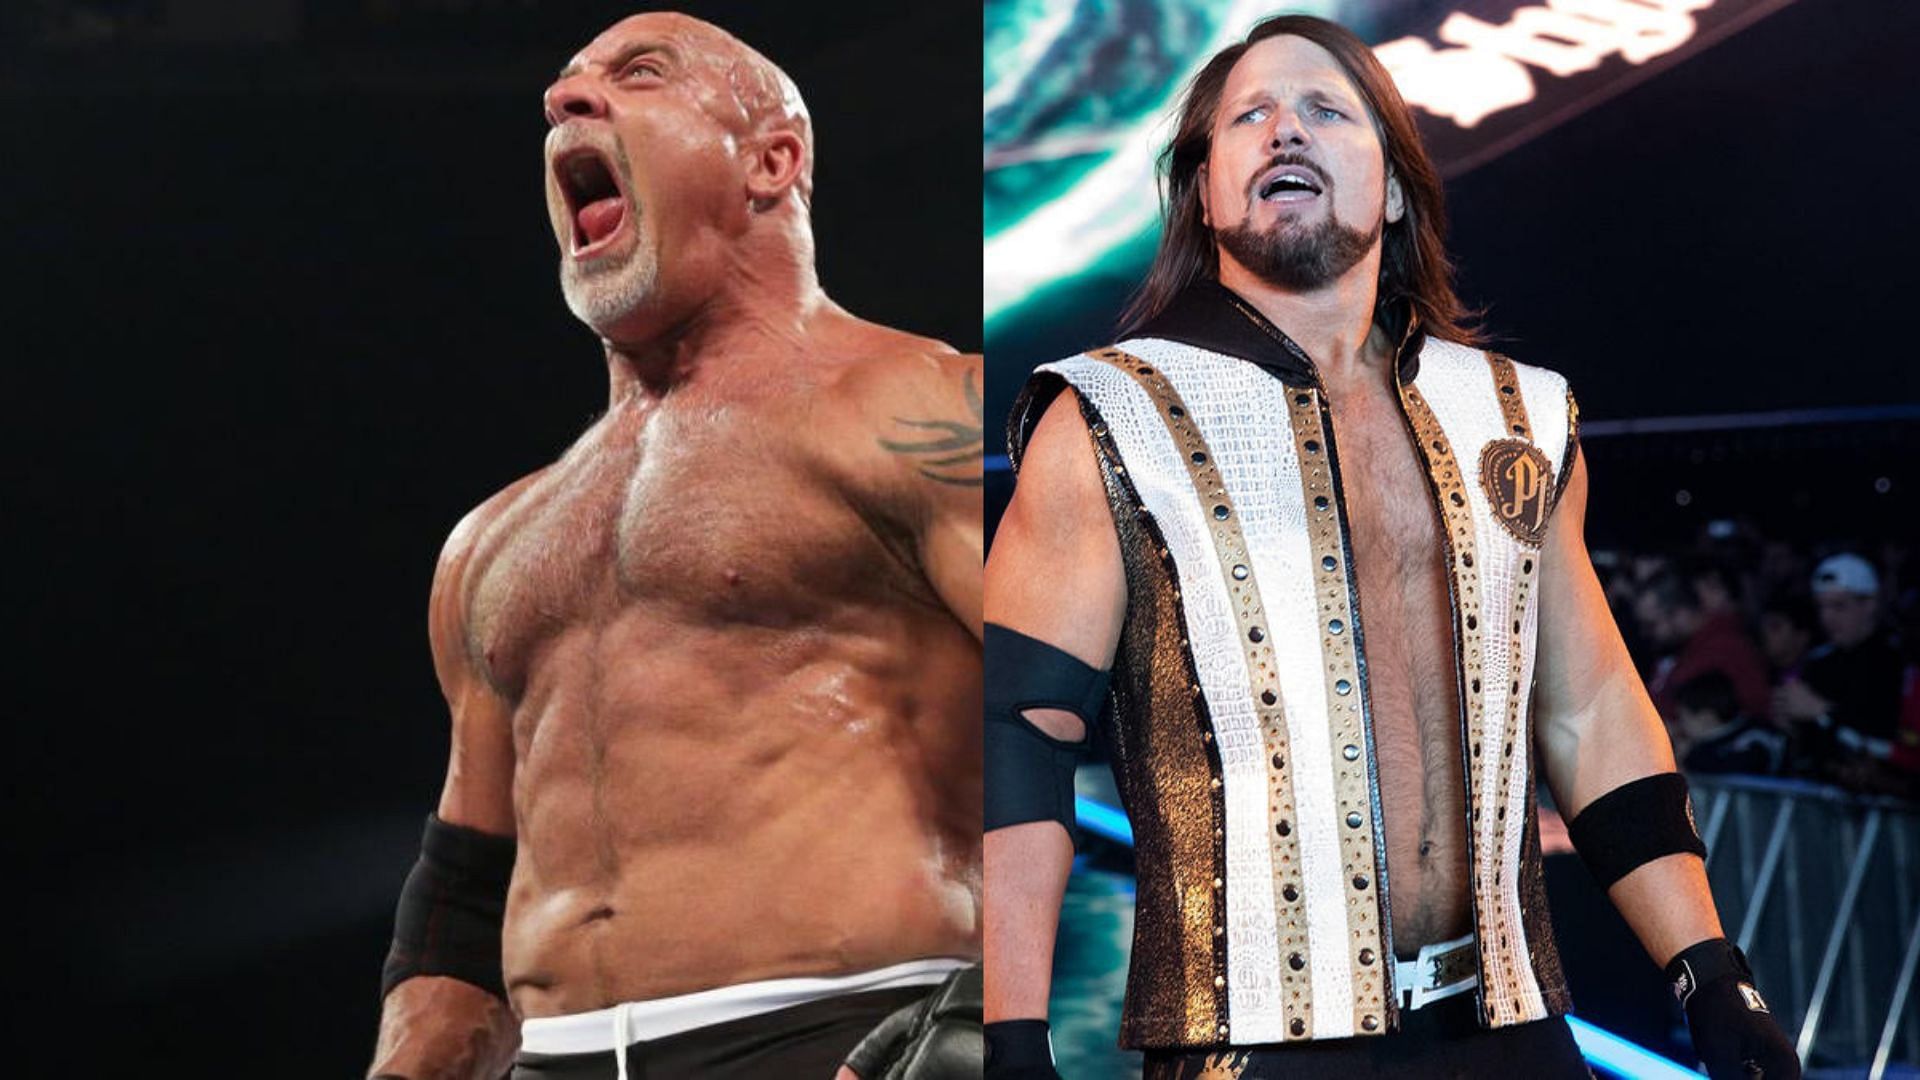 Will Goldberg return to face AJ Styles at SummerSlam?